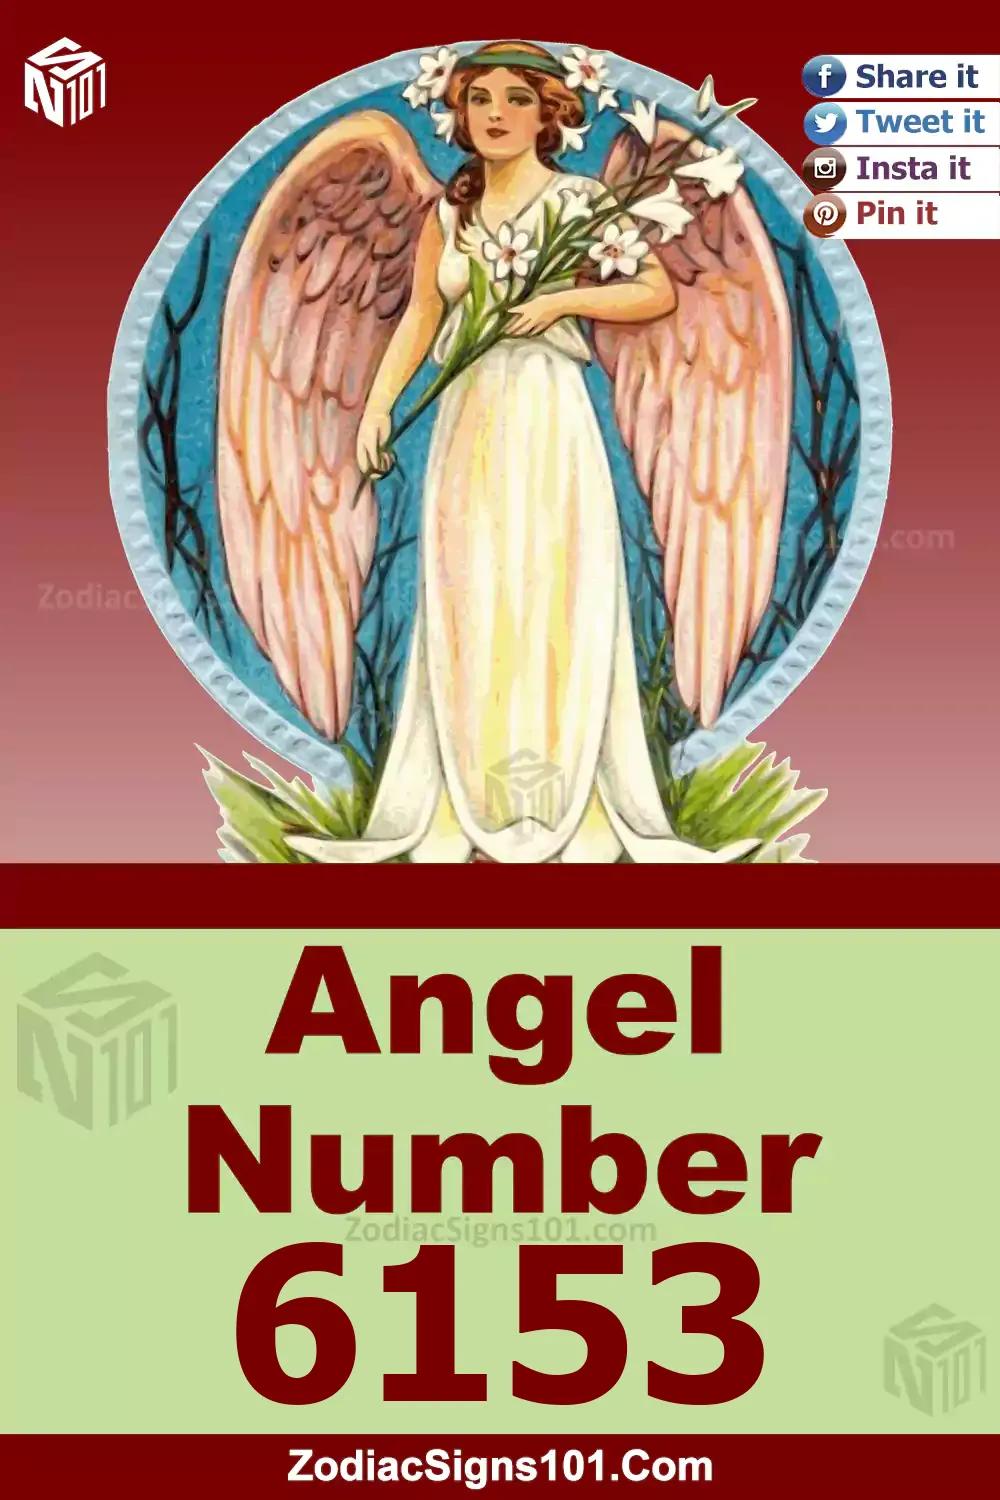 6153-Angel-Number-Meaning.jpg